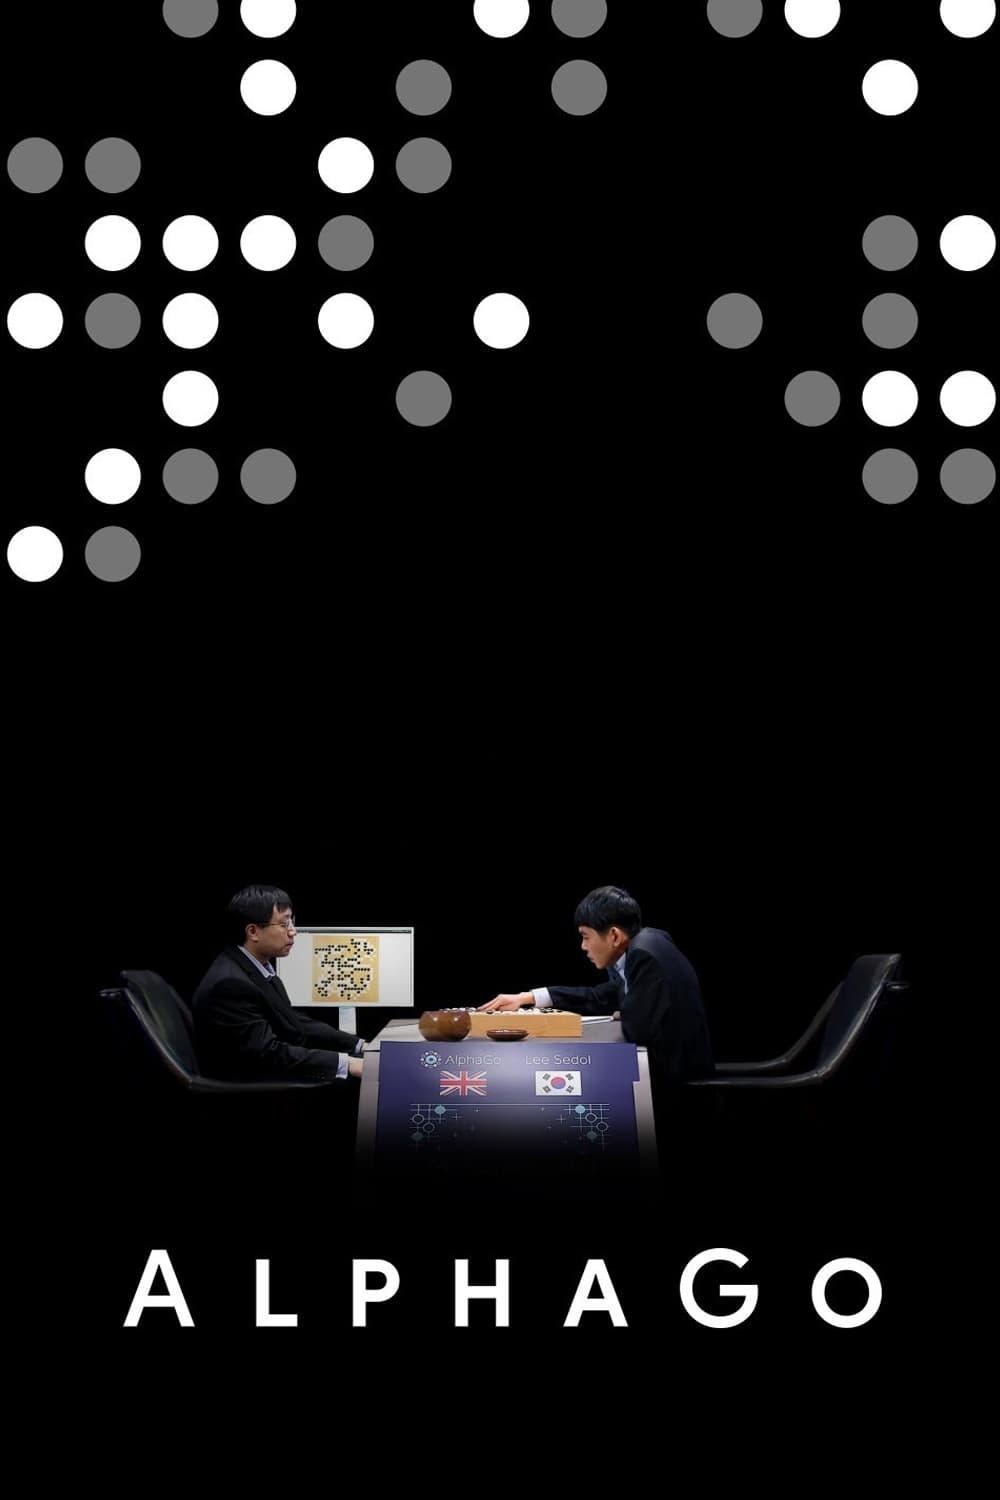 AlphaGo poster